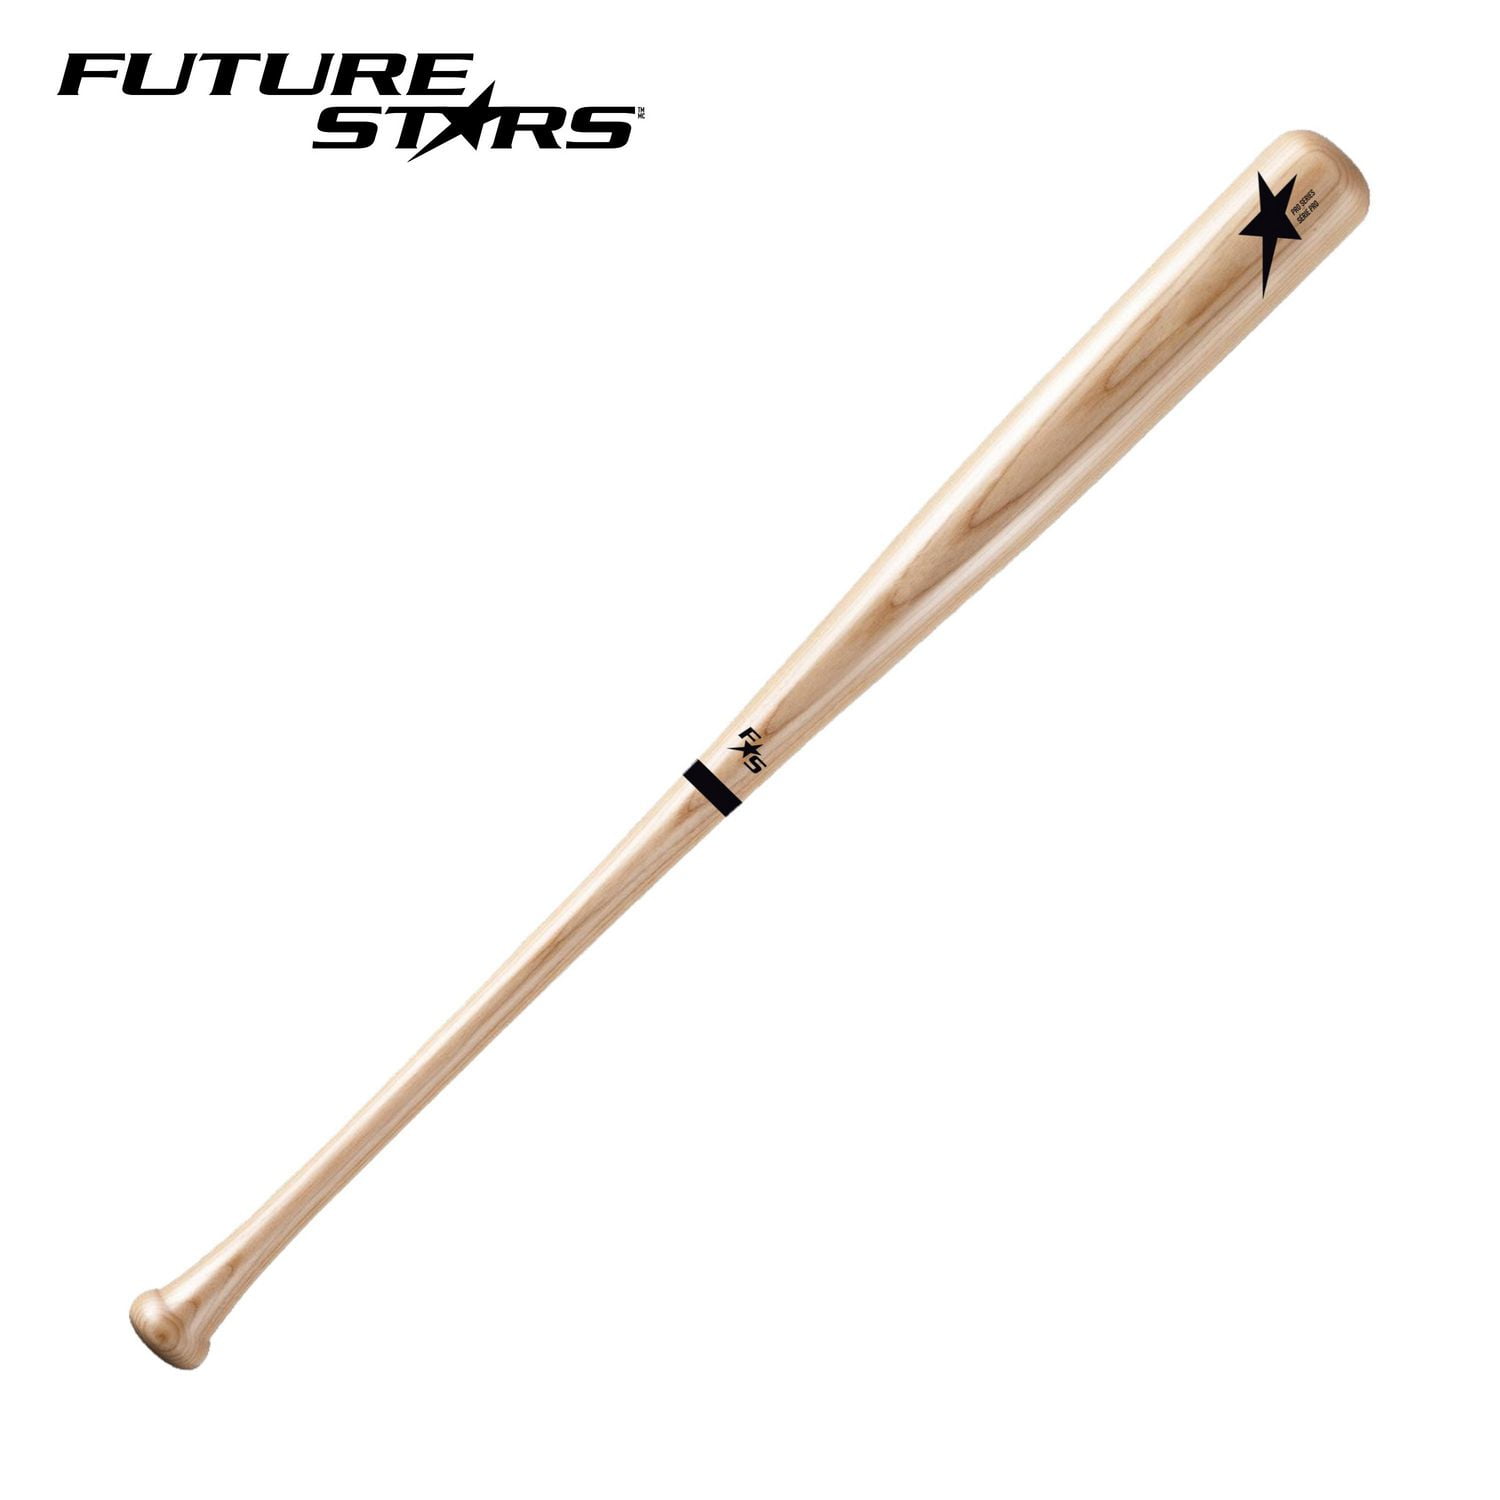 FS 32 Adult Pro-Style Wood Baseball Bat - Natural Wood Grain 